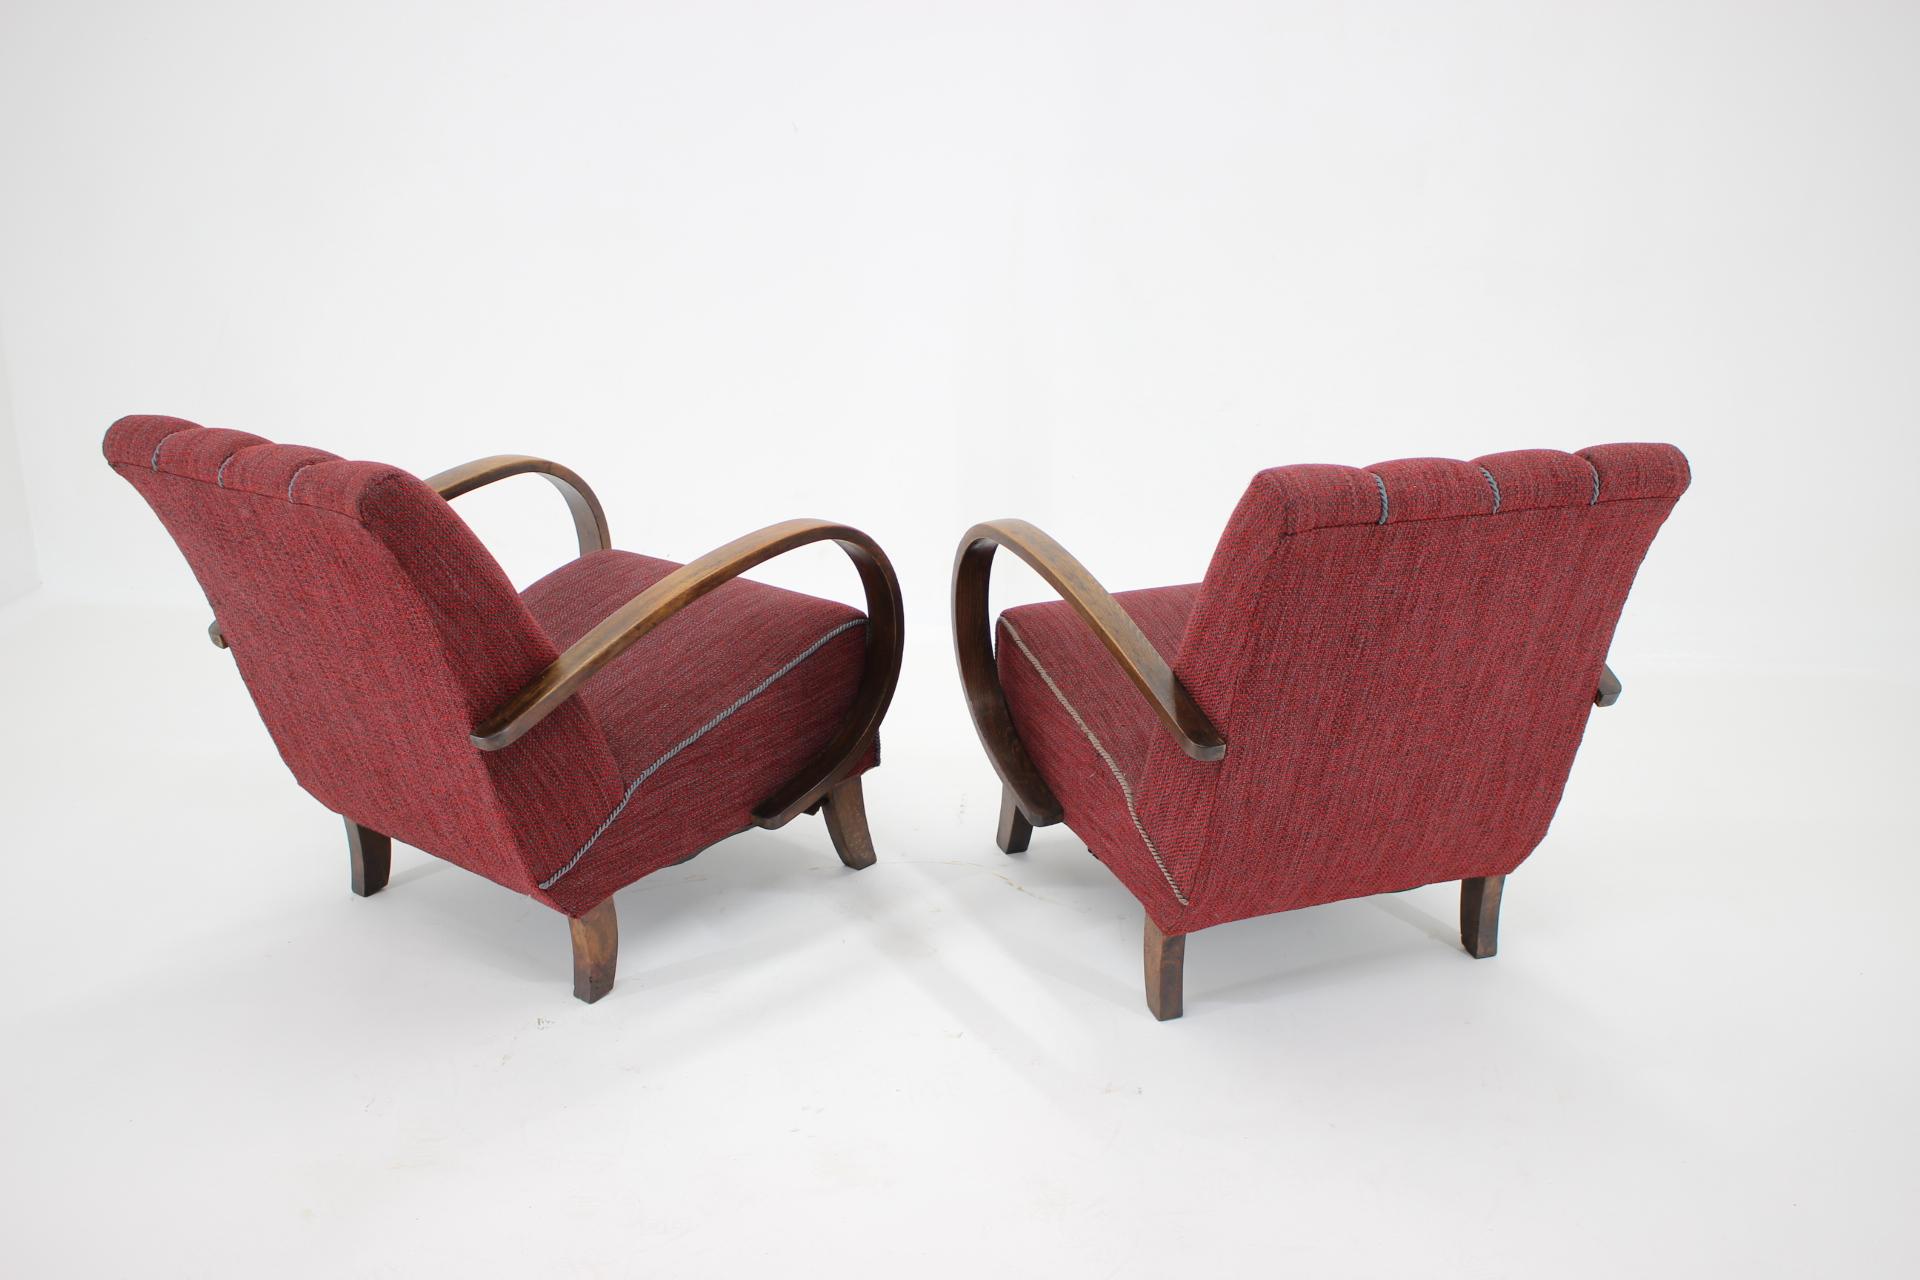 - Czechoslovakia, circa 1950s
- Renovated, incl new upholstery circa 5 years ago
- Good condition.